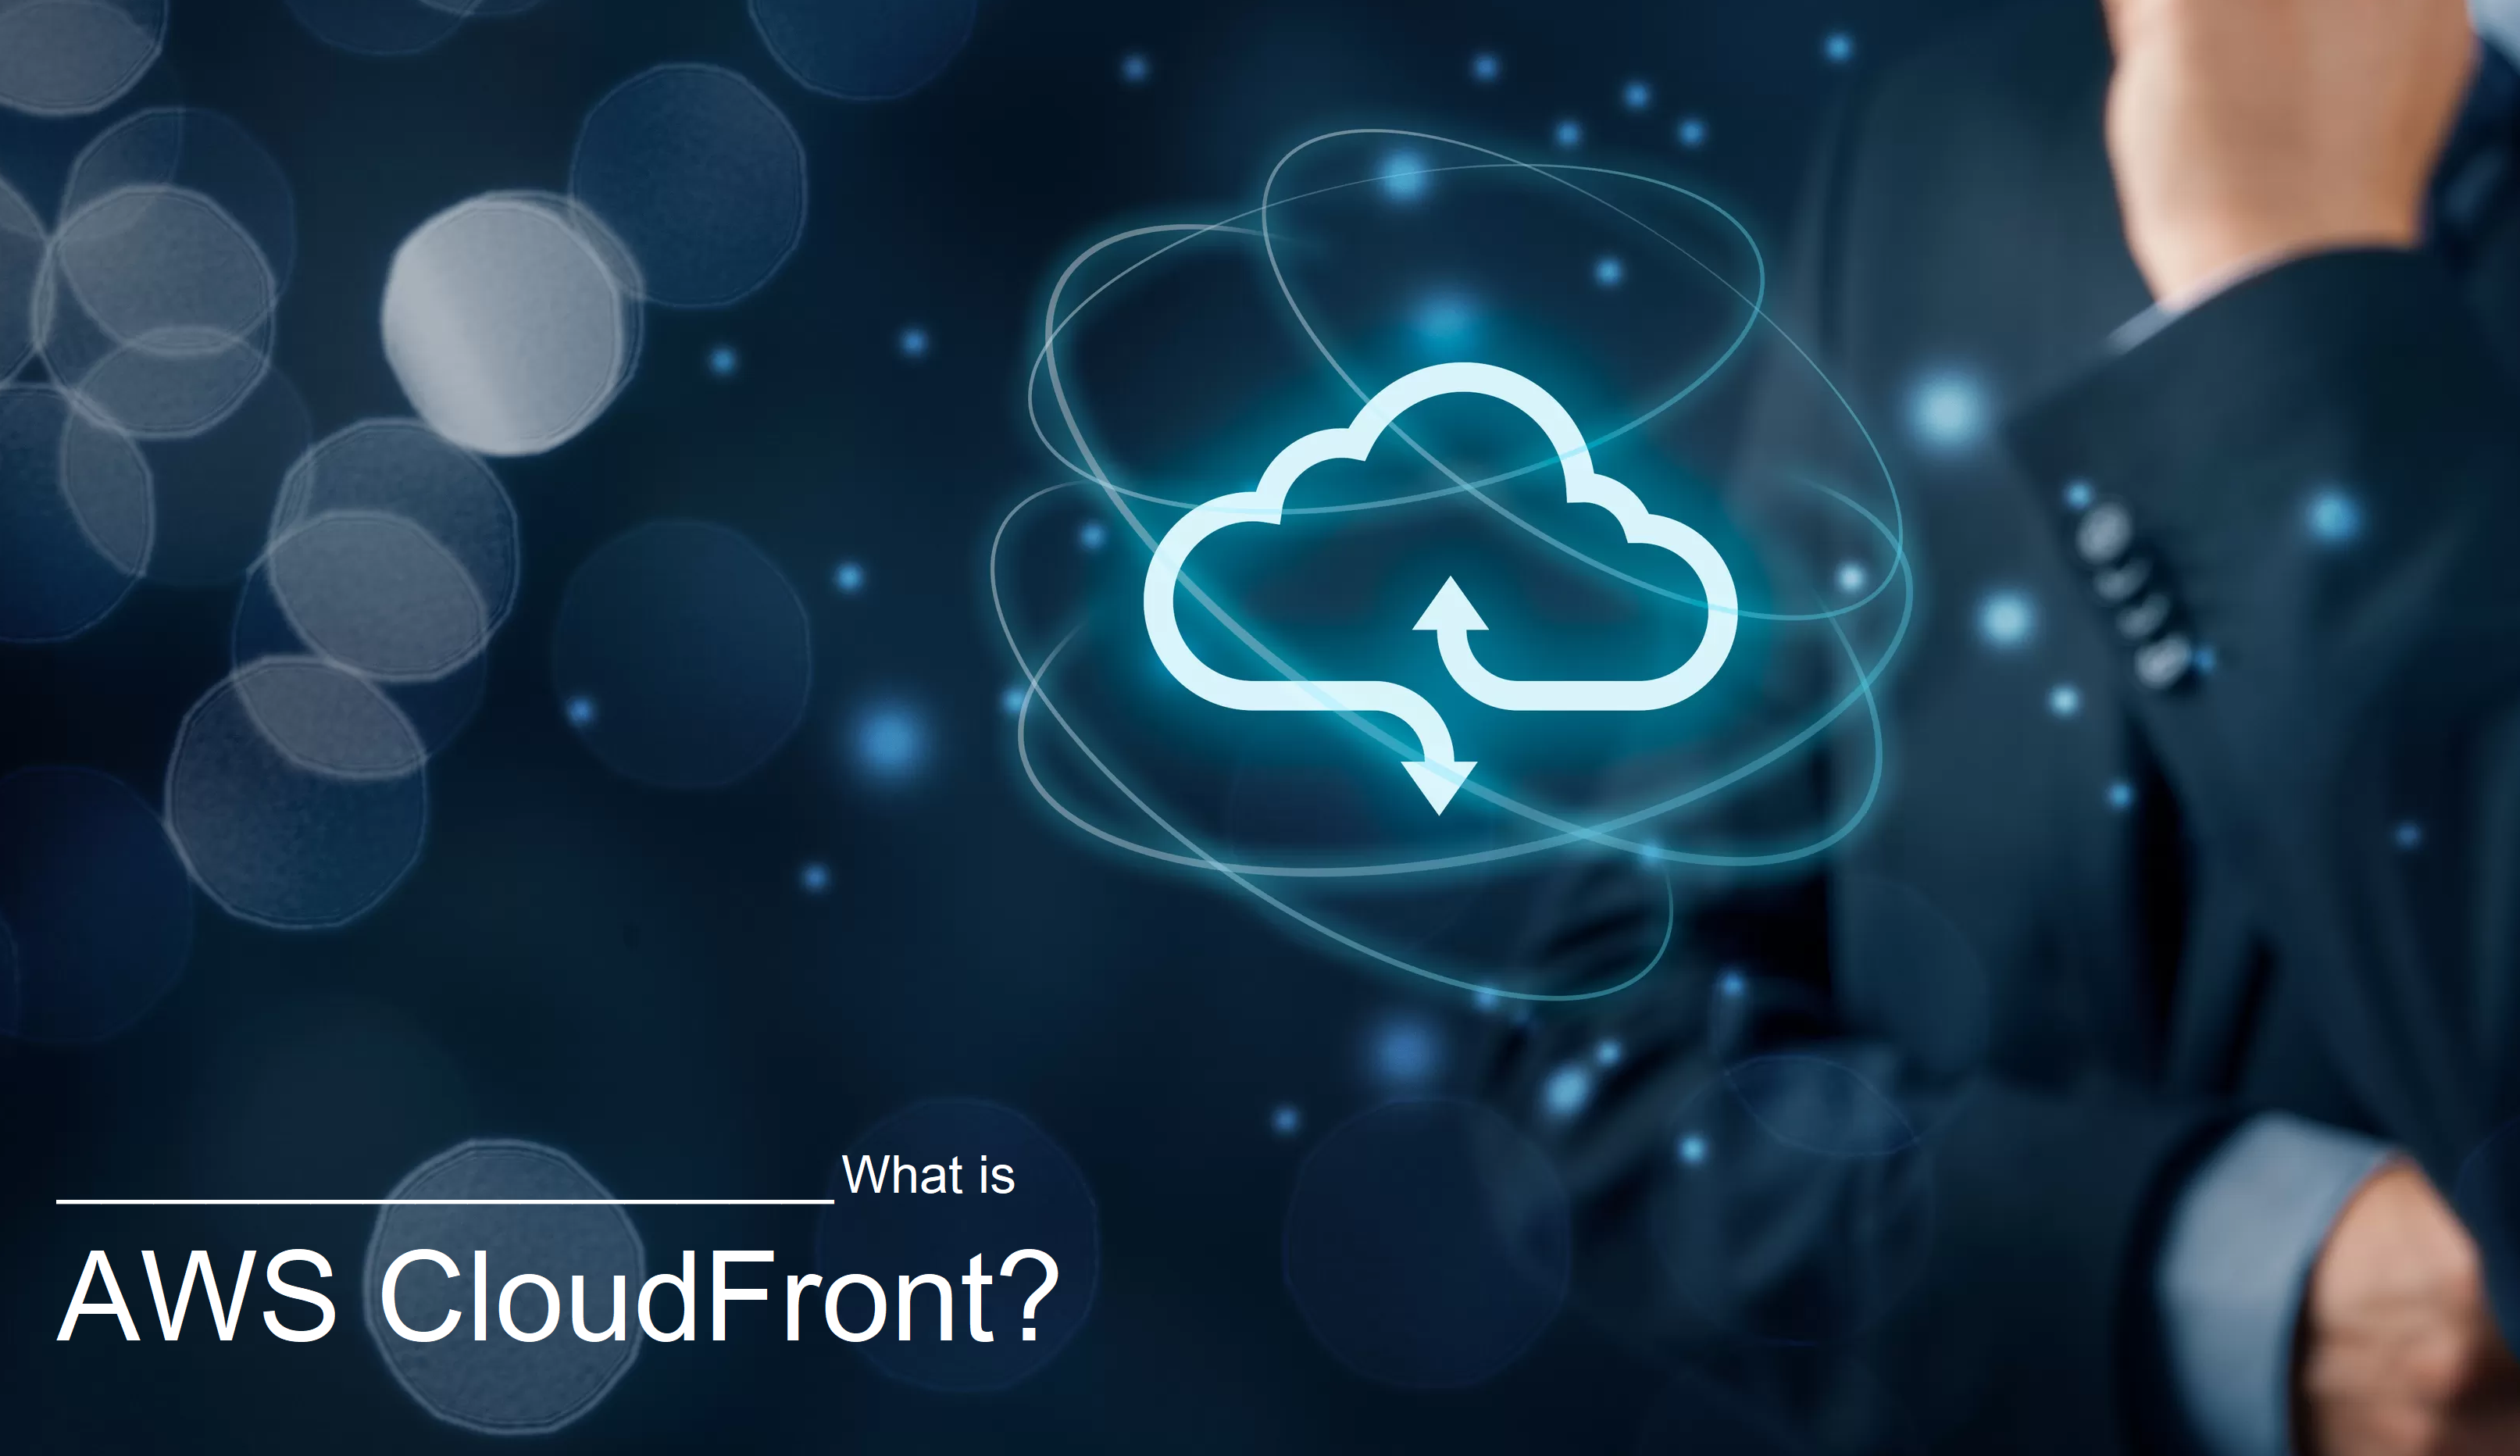 AWS CloudFront